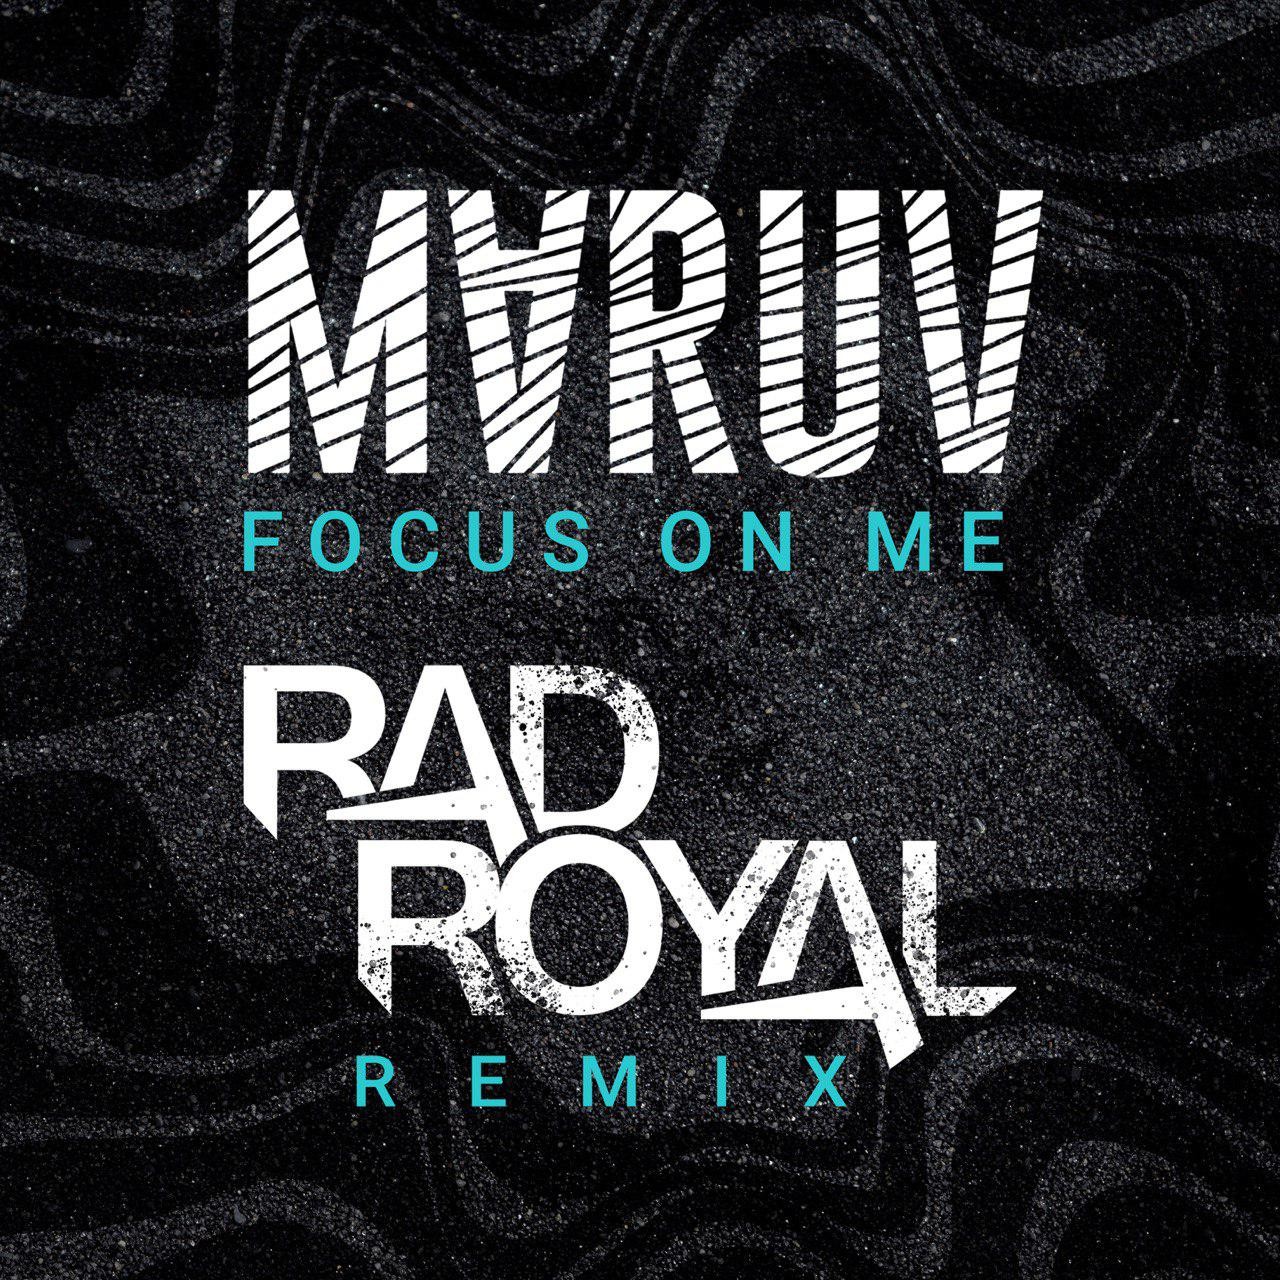 Royalty remix. Maruv Focus on me обложка. Focus on me. Maruv Focus on me. Maruv Lyrics Focus on me.